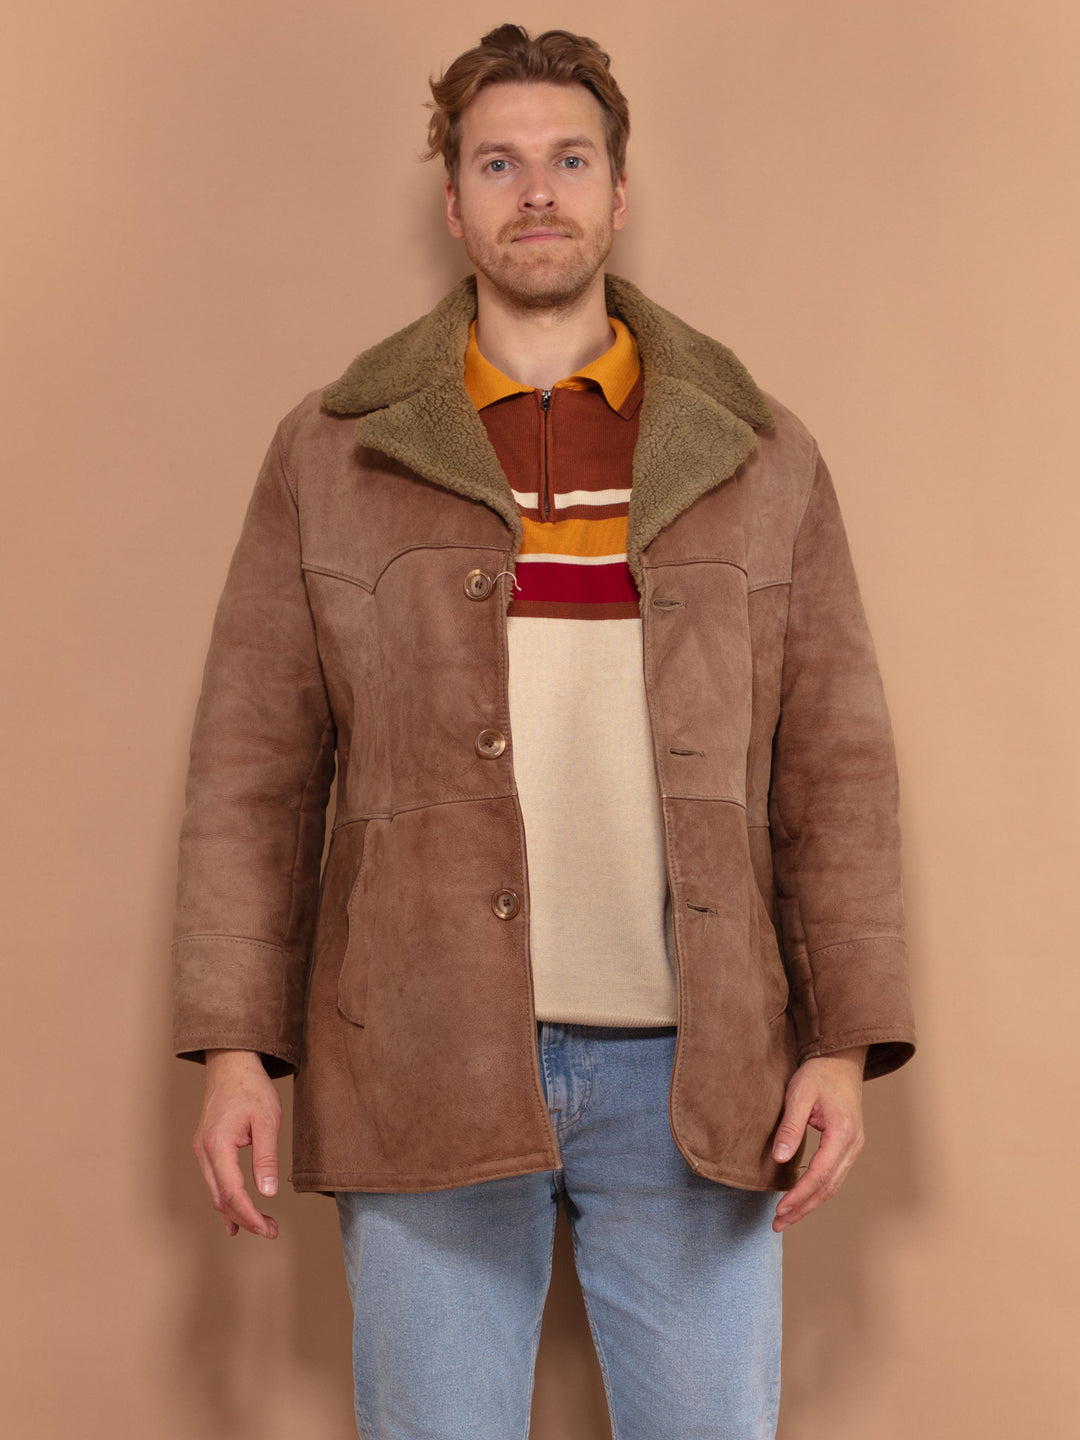 Western Style Sheepskin Coat 70s, Size Medium, Vintage Men Collared Coat, Light Brown Suede Winter Coat, Boho Outerwear, Cowboy Wear